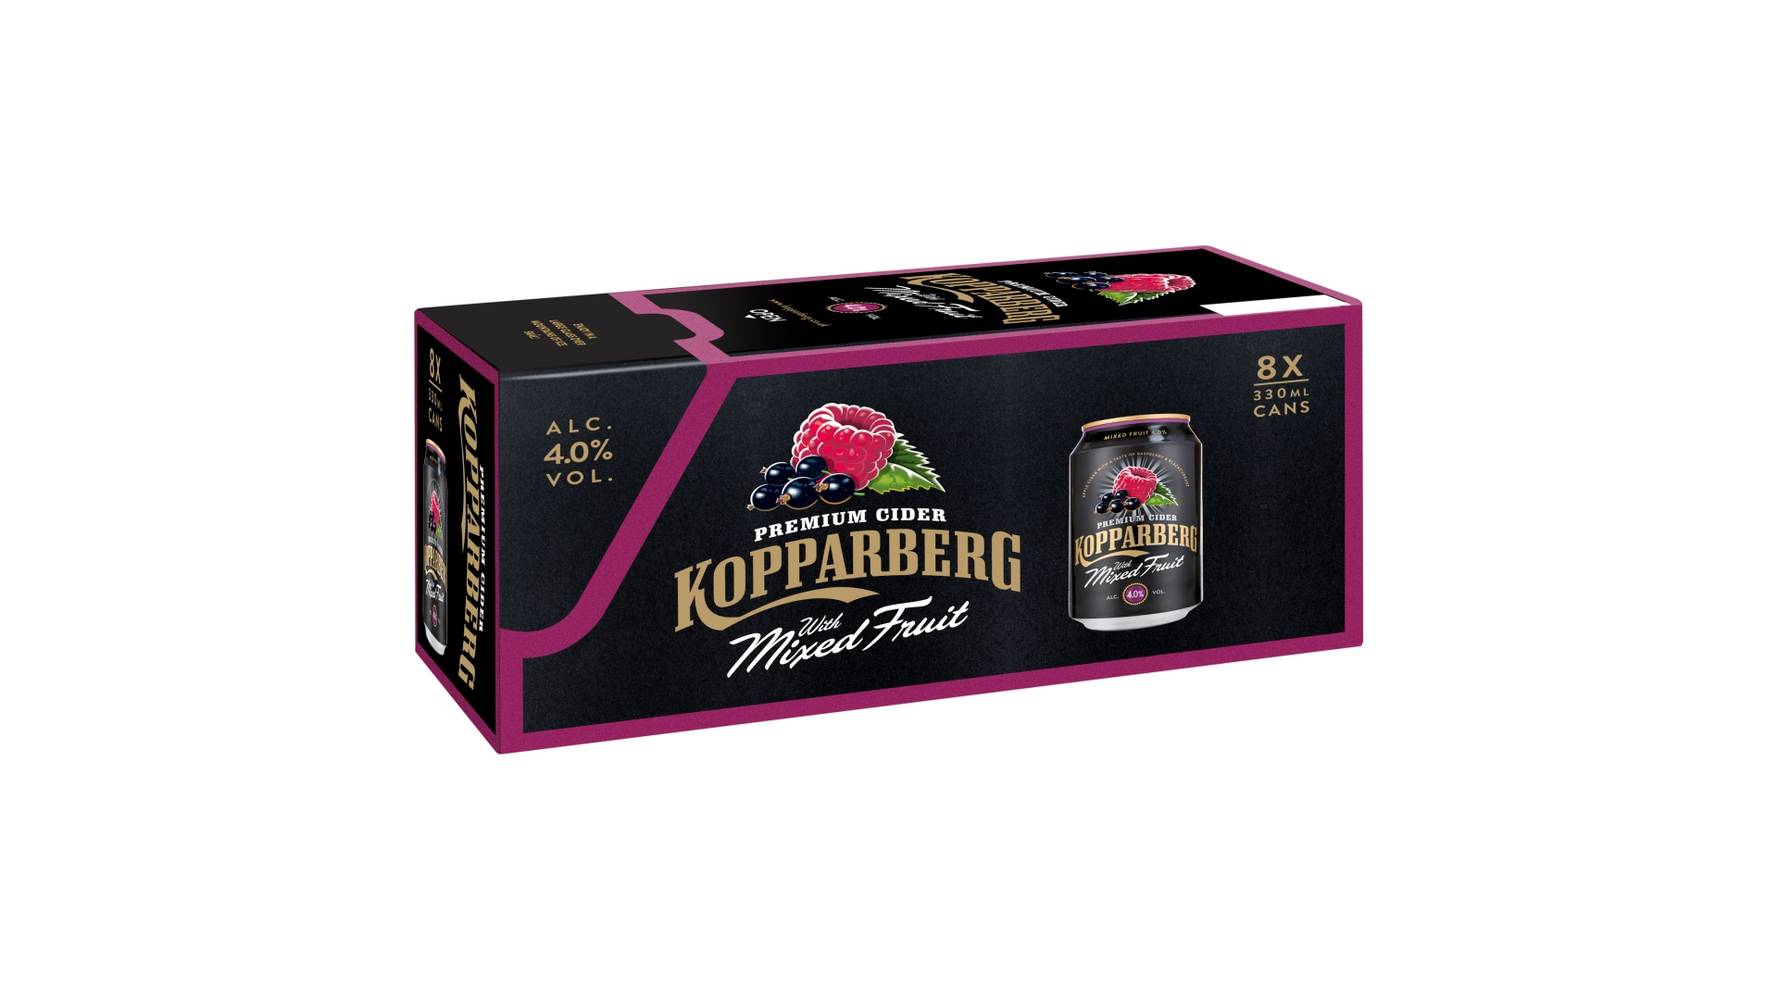 Kopparberg Premium Cider with Mixed Fruit 8 x 330ml